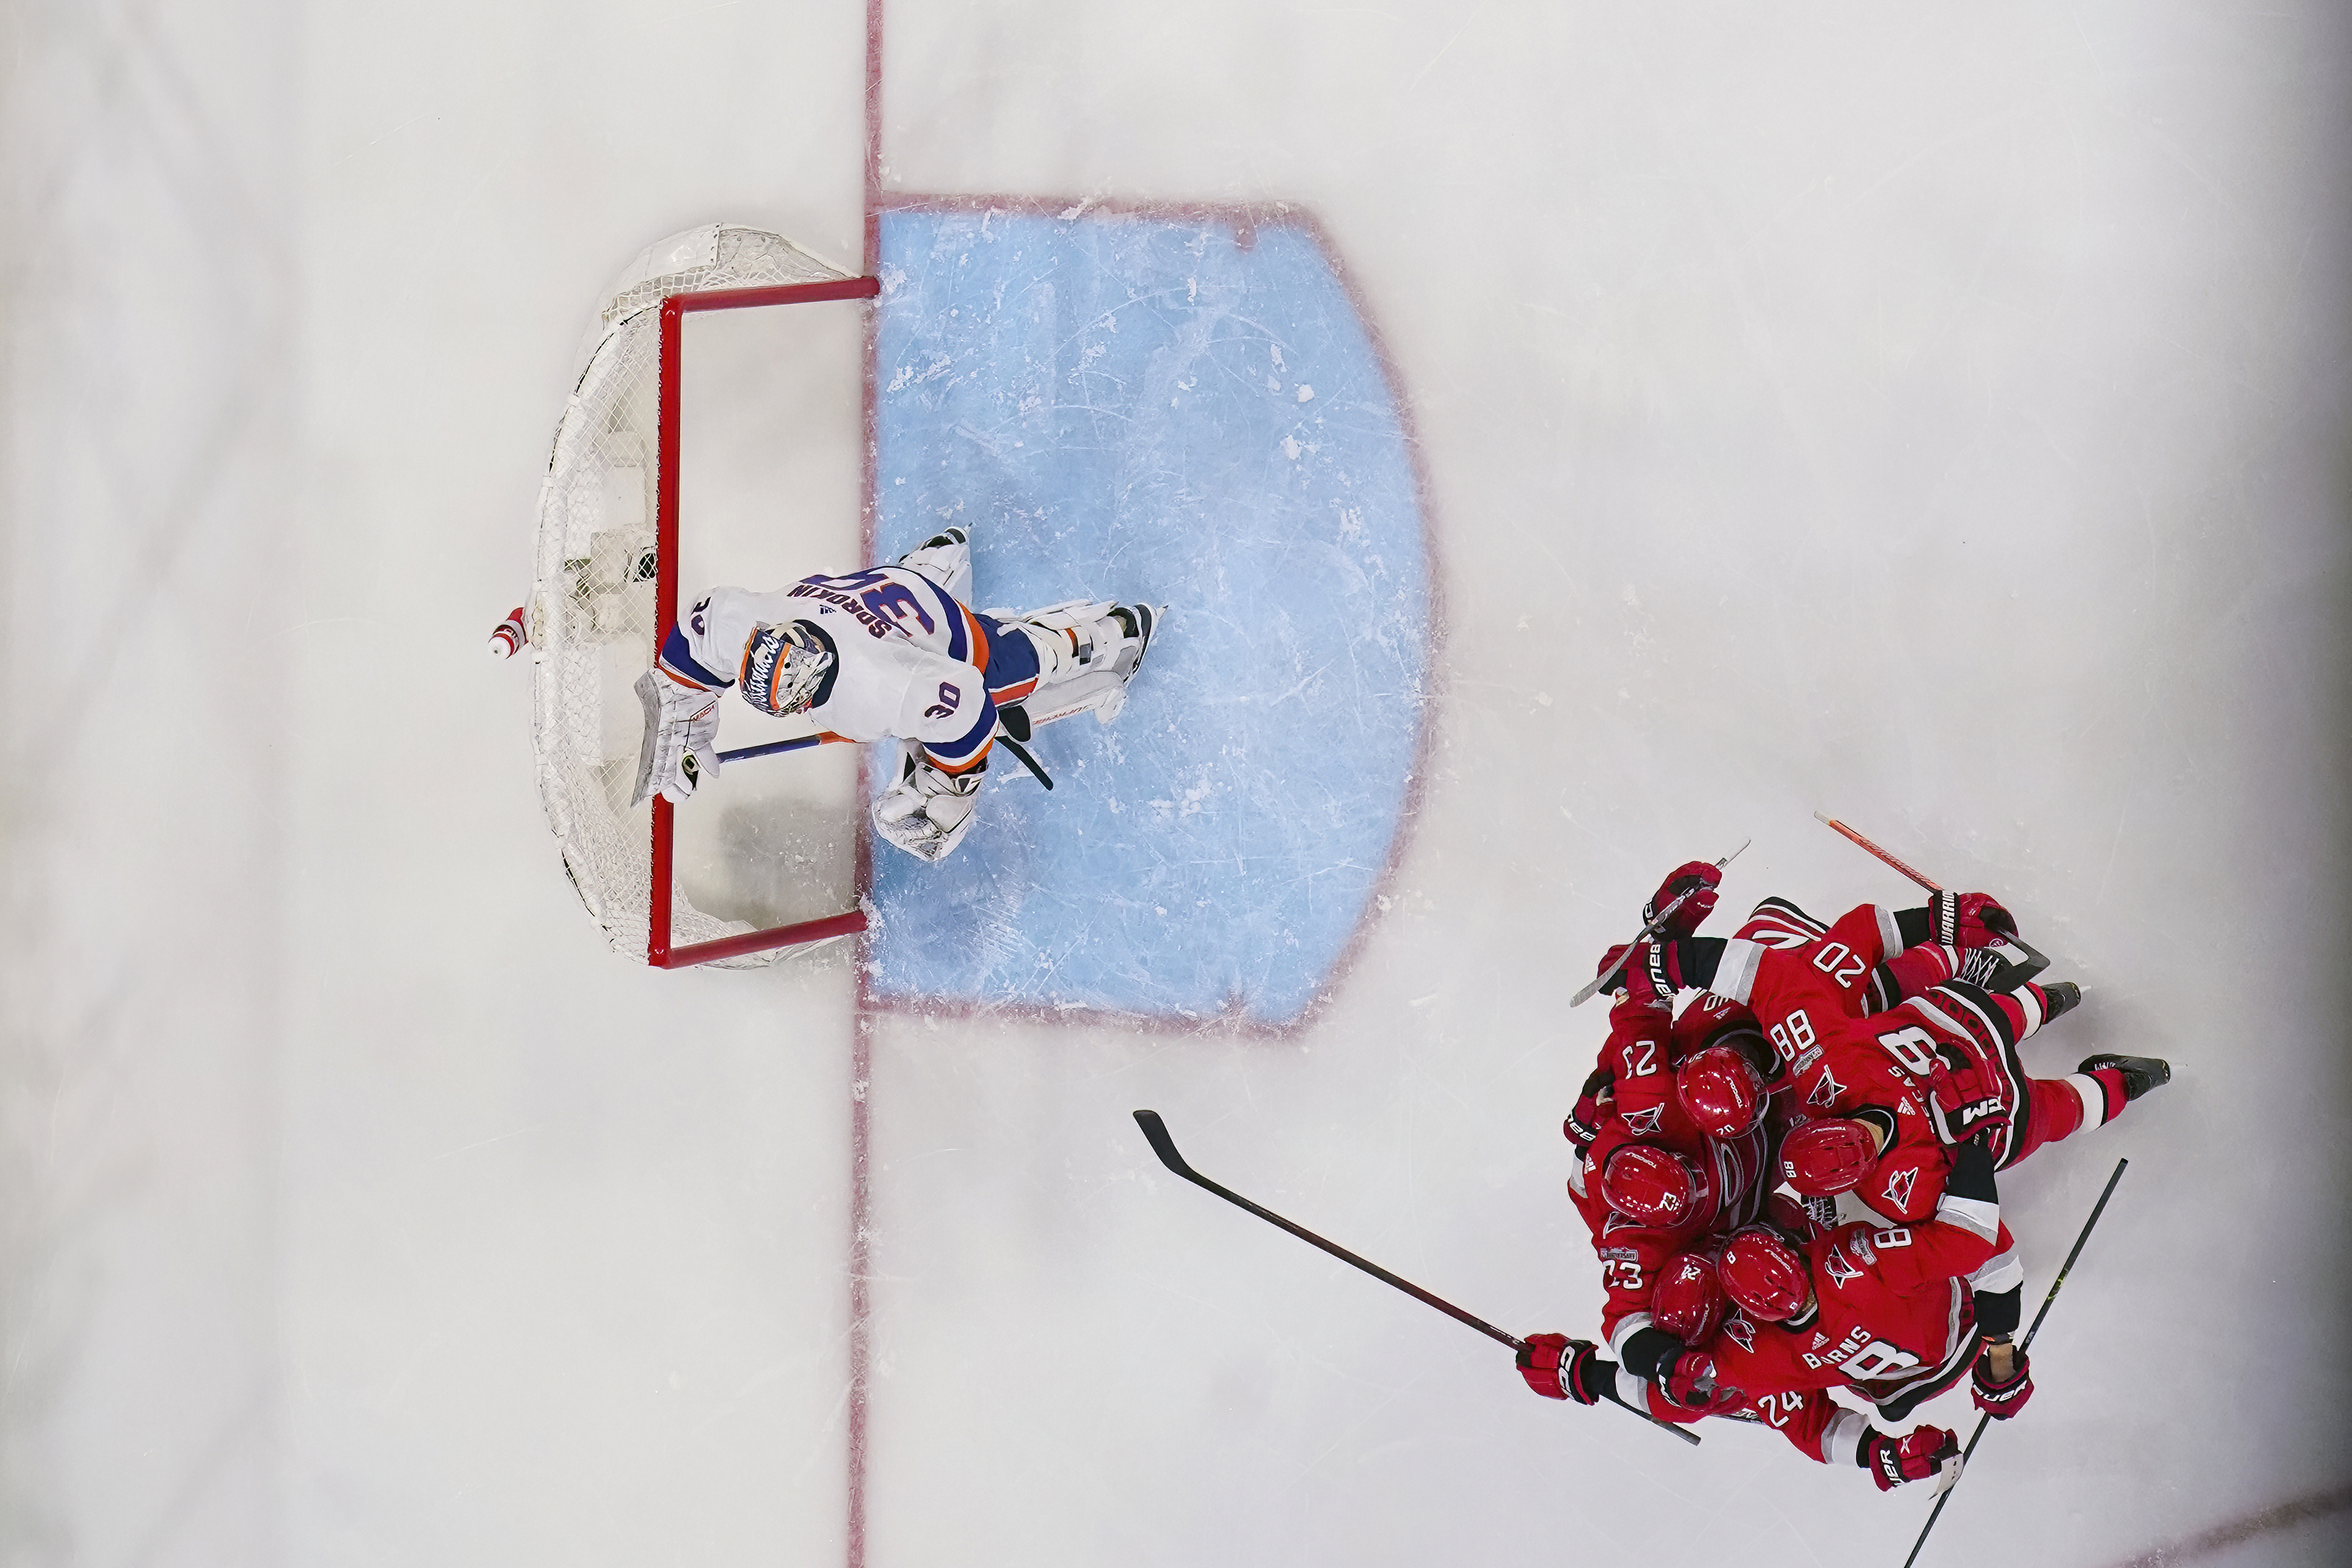 NHL roundup: Ryan Hartman gives Wild 2OT win over Stars